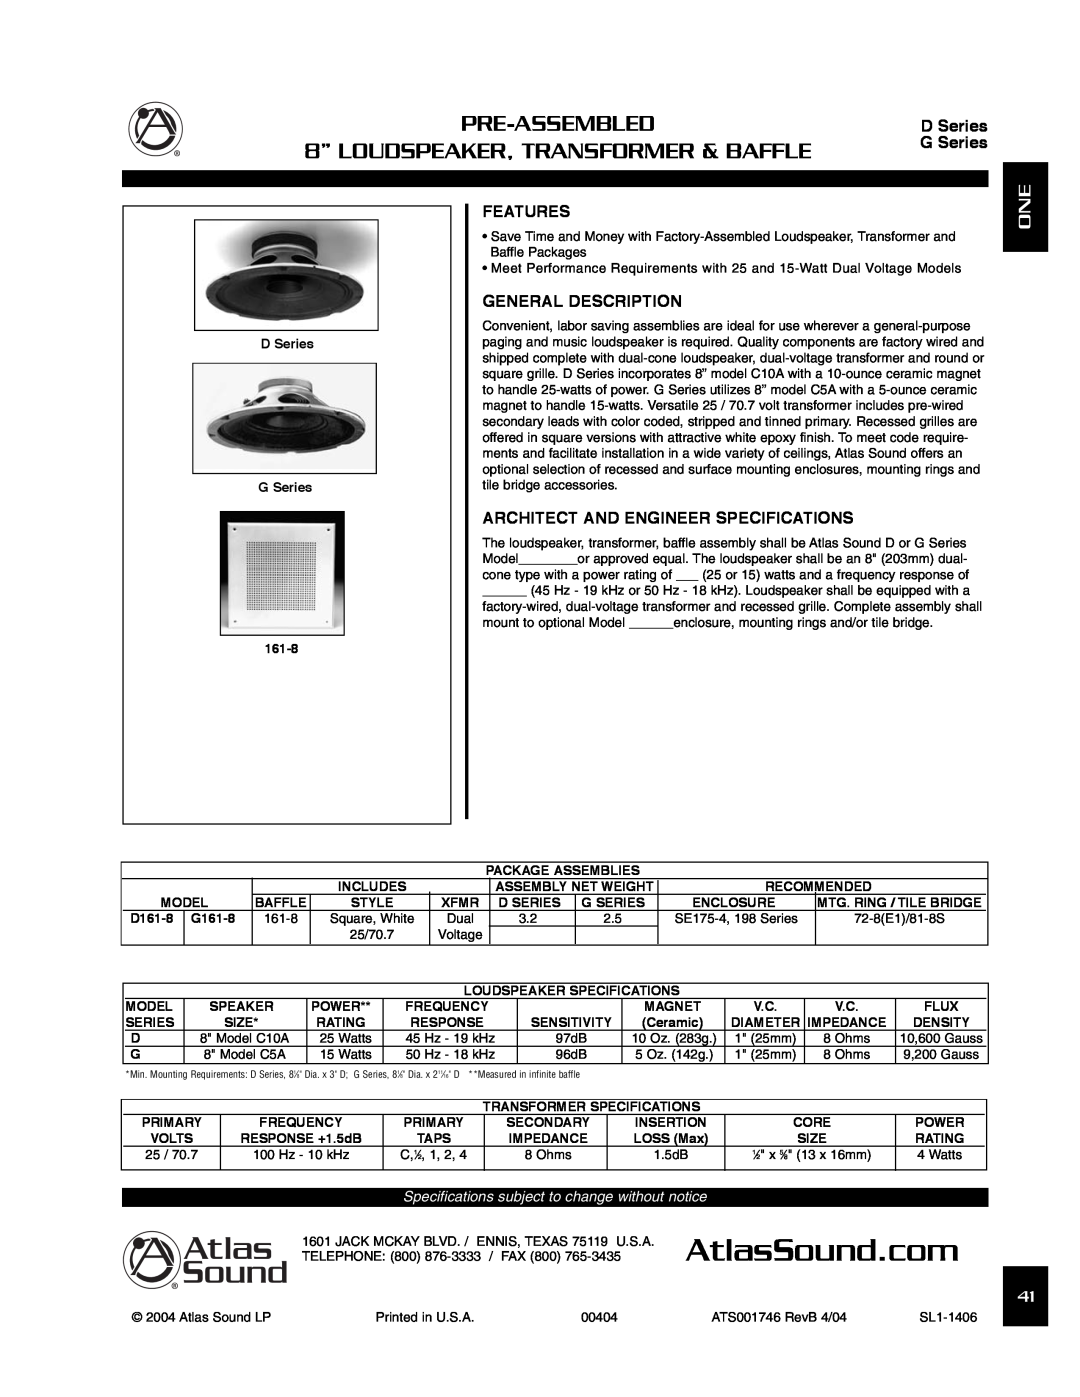 Atlas Sound D161-8 specifications Pre-Assembled, 8” LOUDSPEAKER, TRANSFORMER & BAFFLE, Features, General Description 